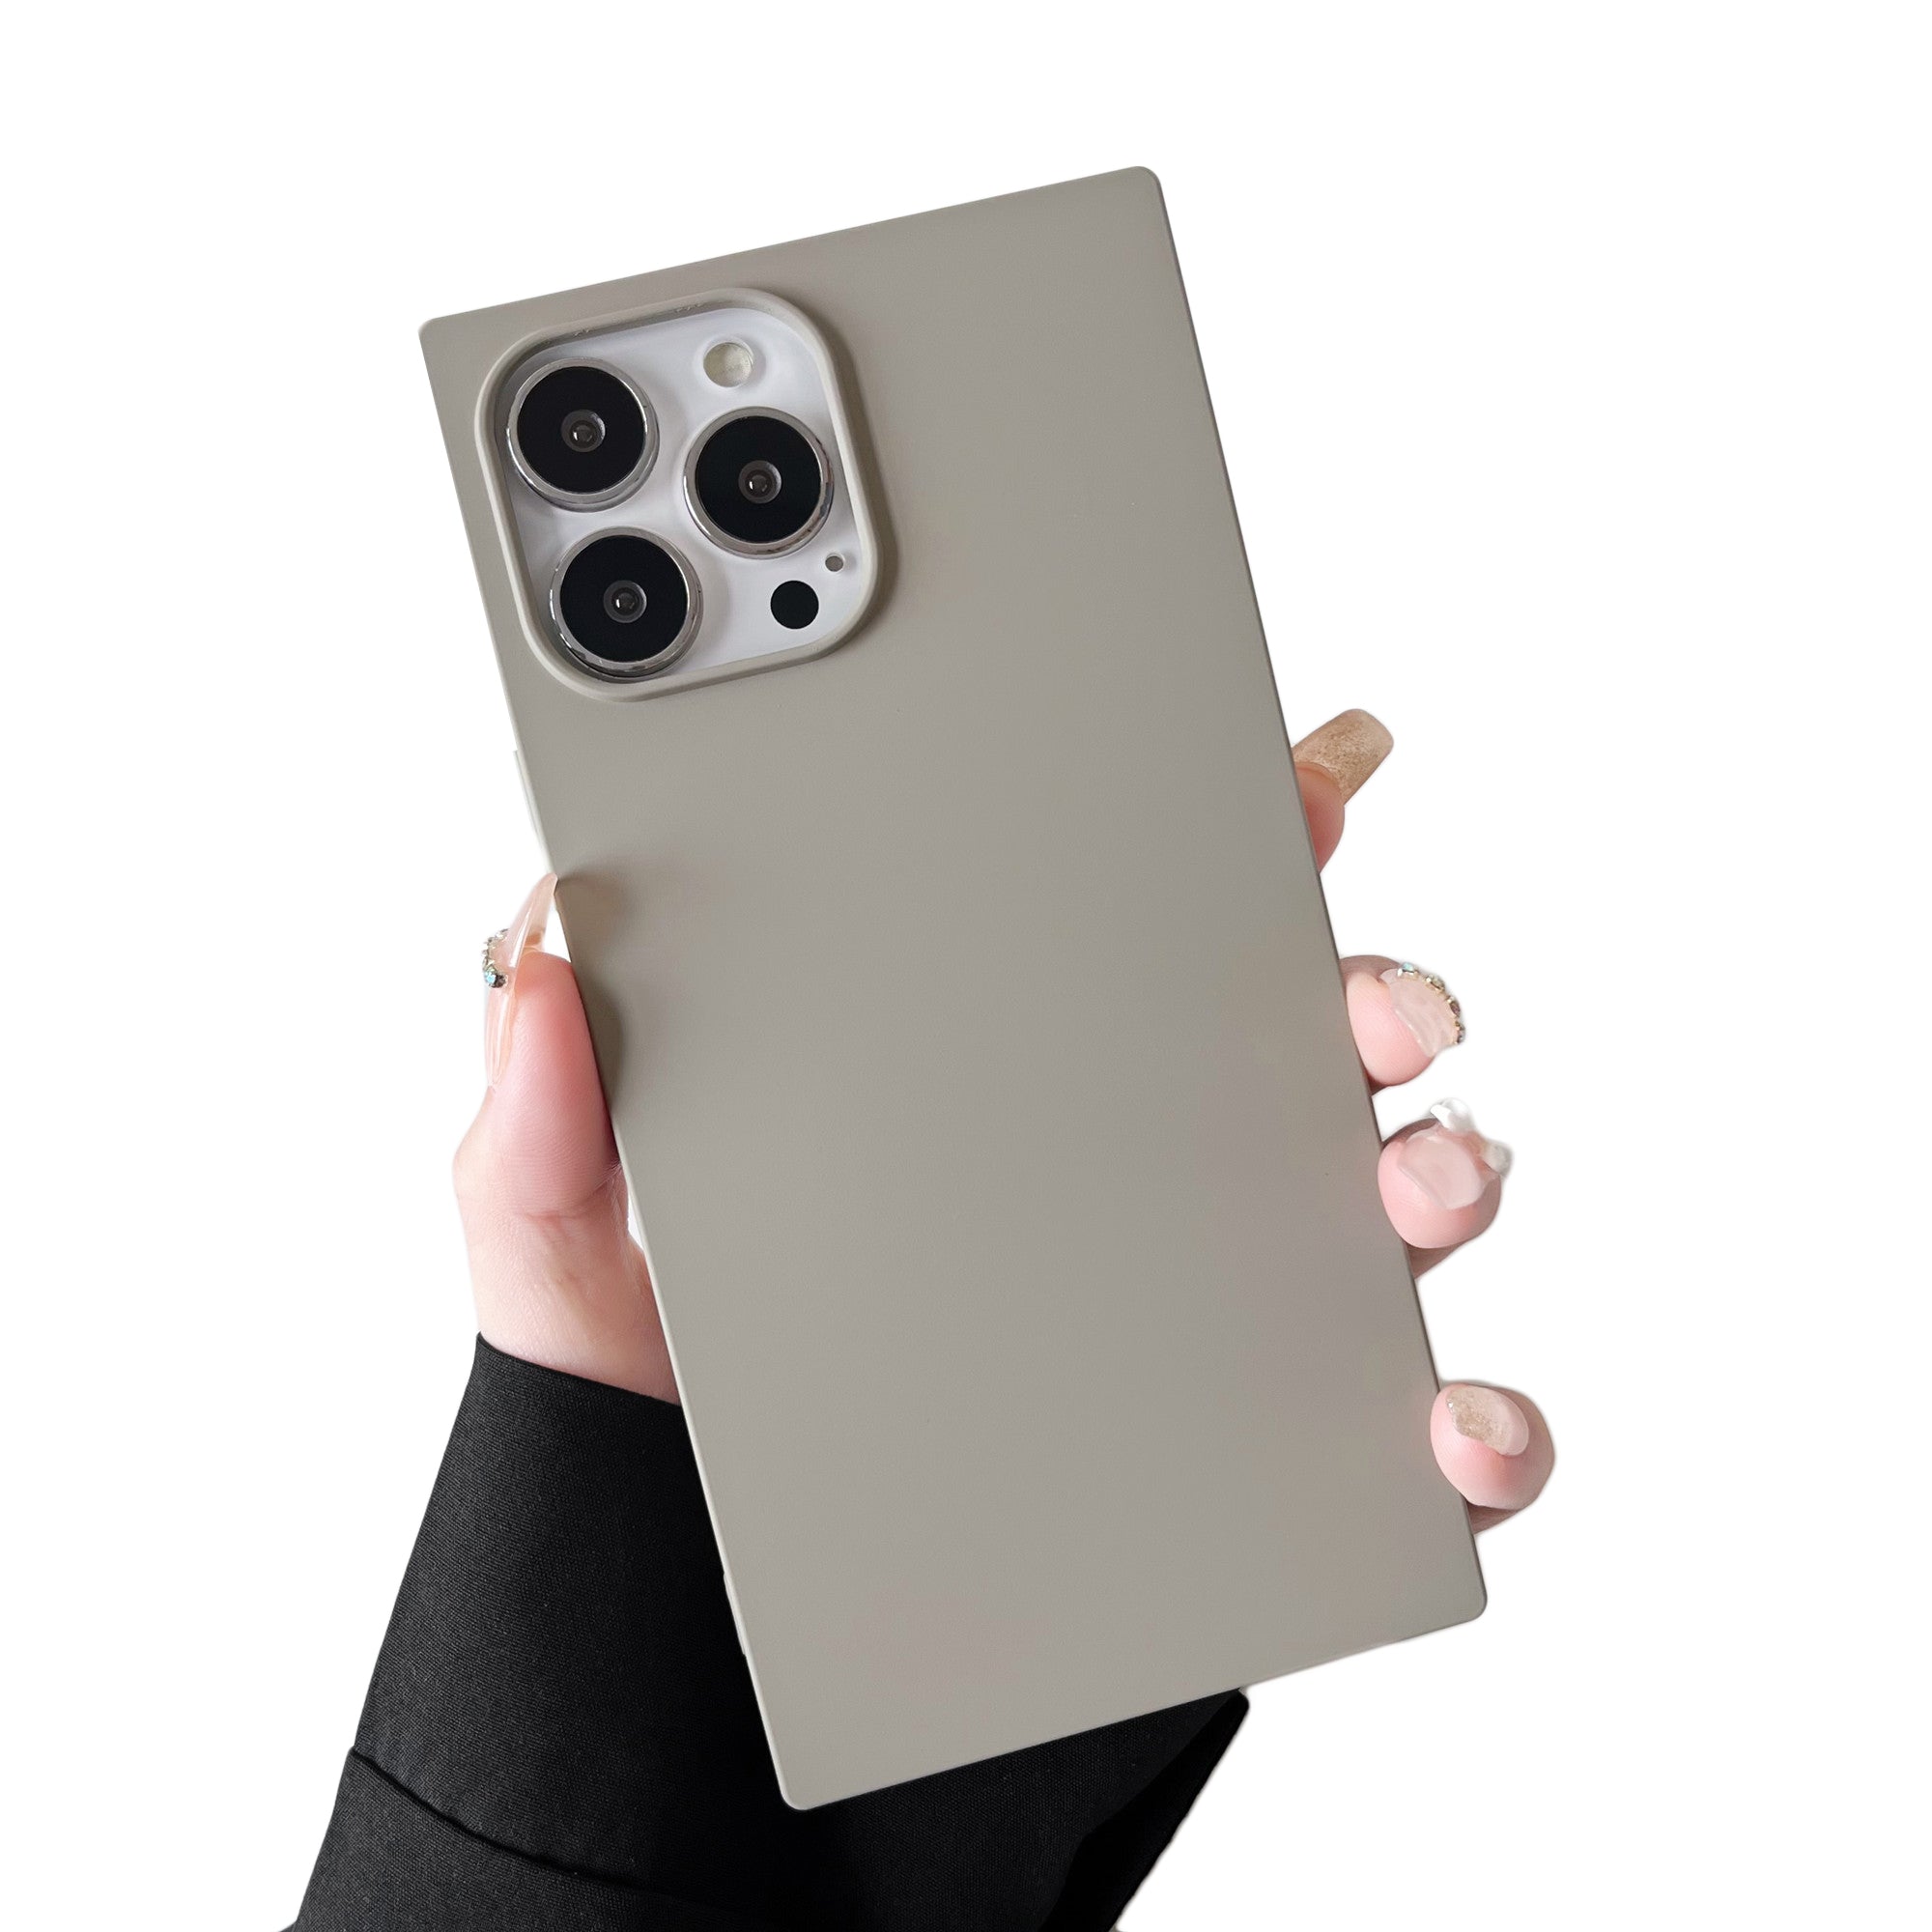 iPhone 11 Pro Case Square Silicone Neutral Color (Asphalt Gray)